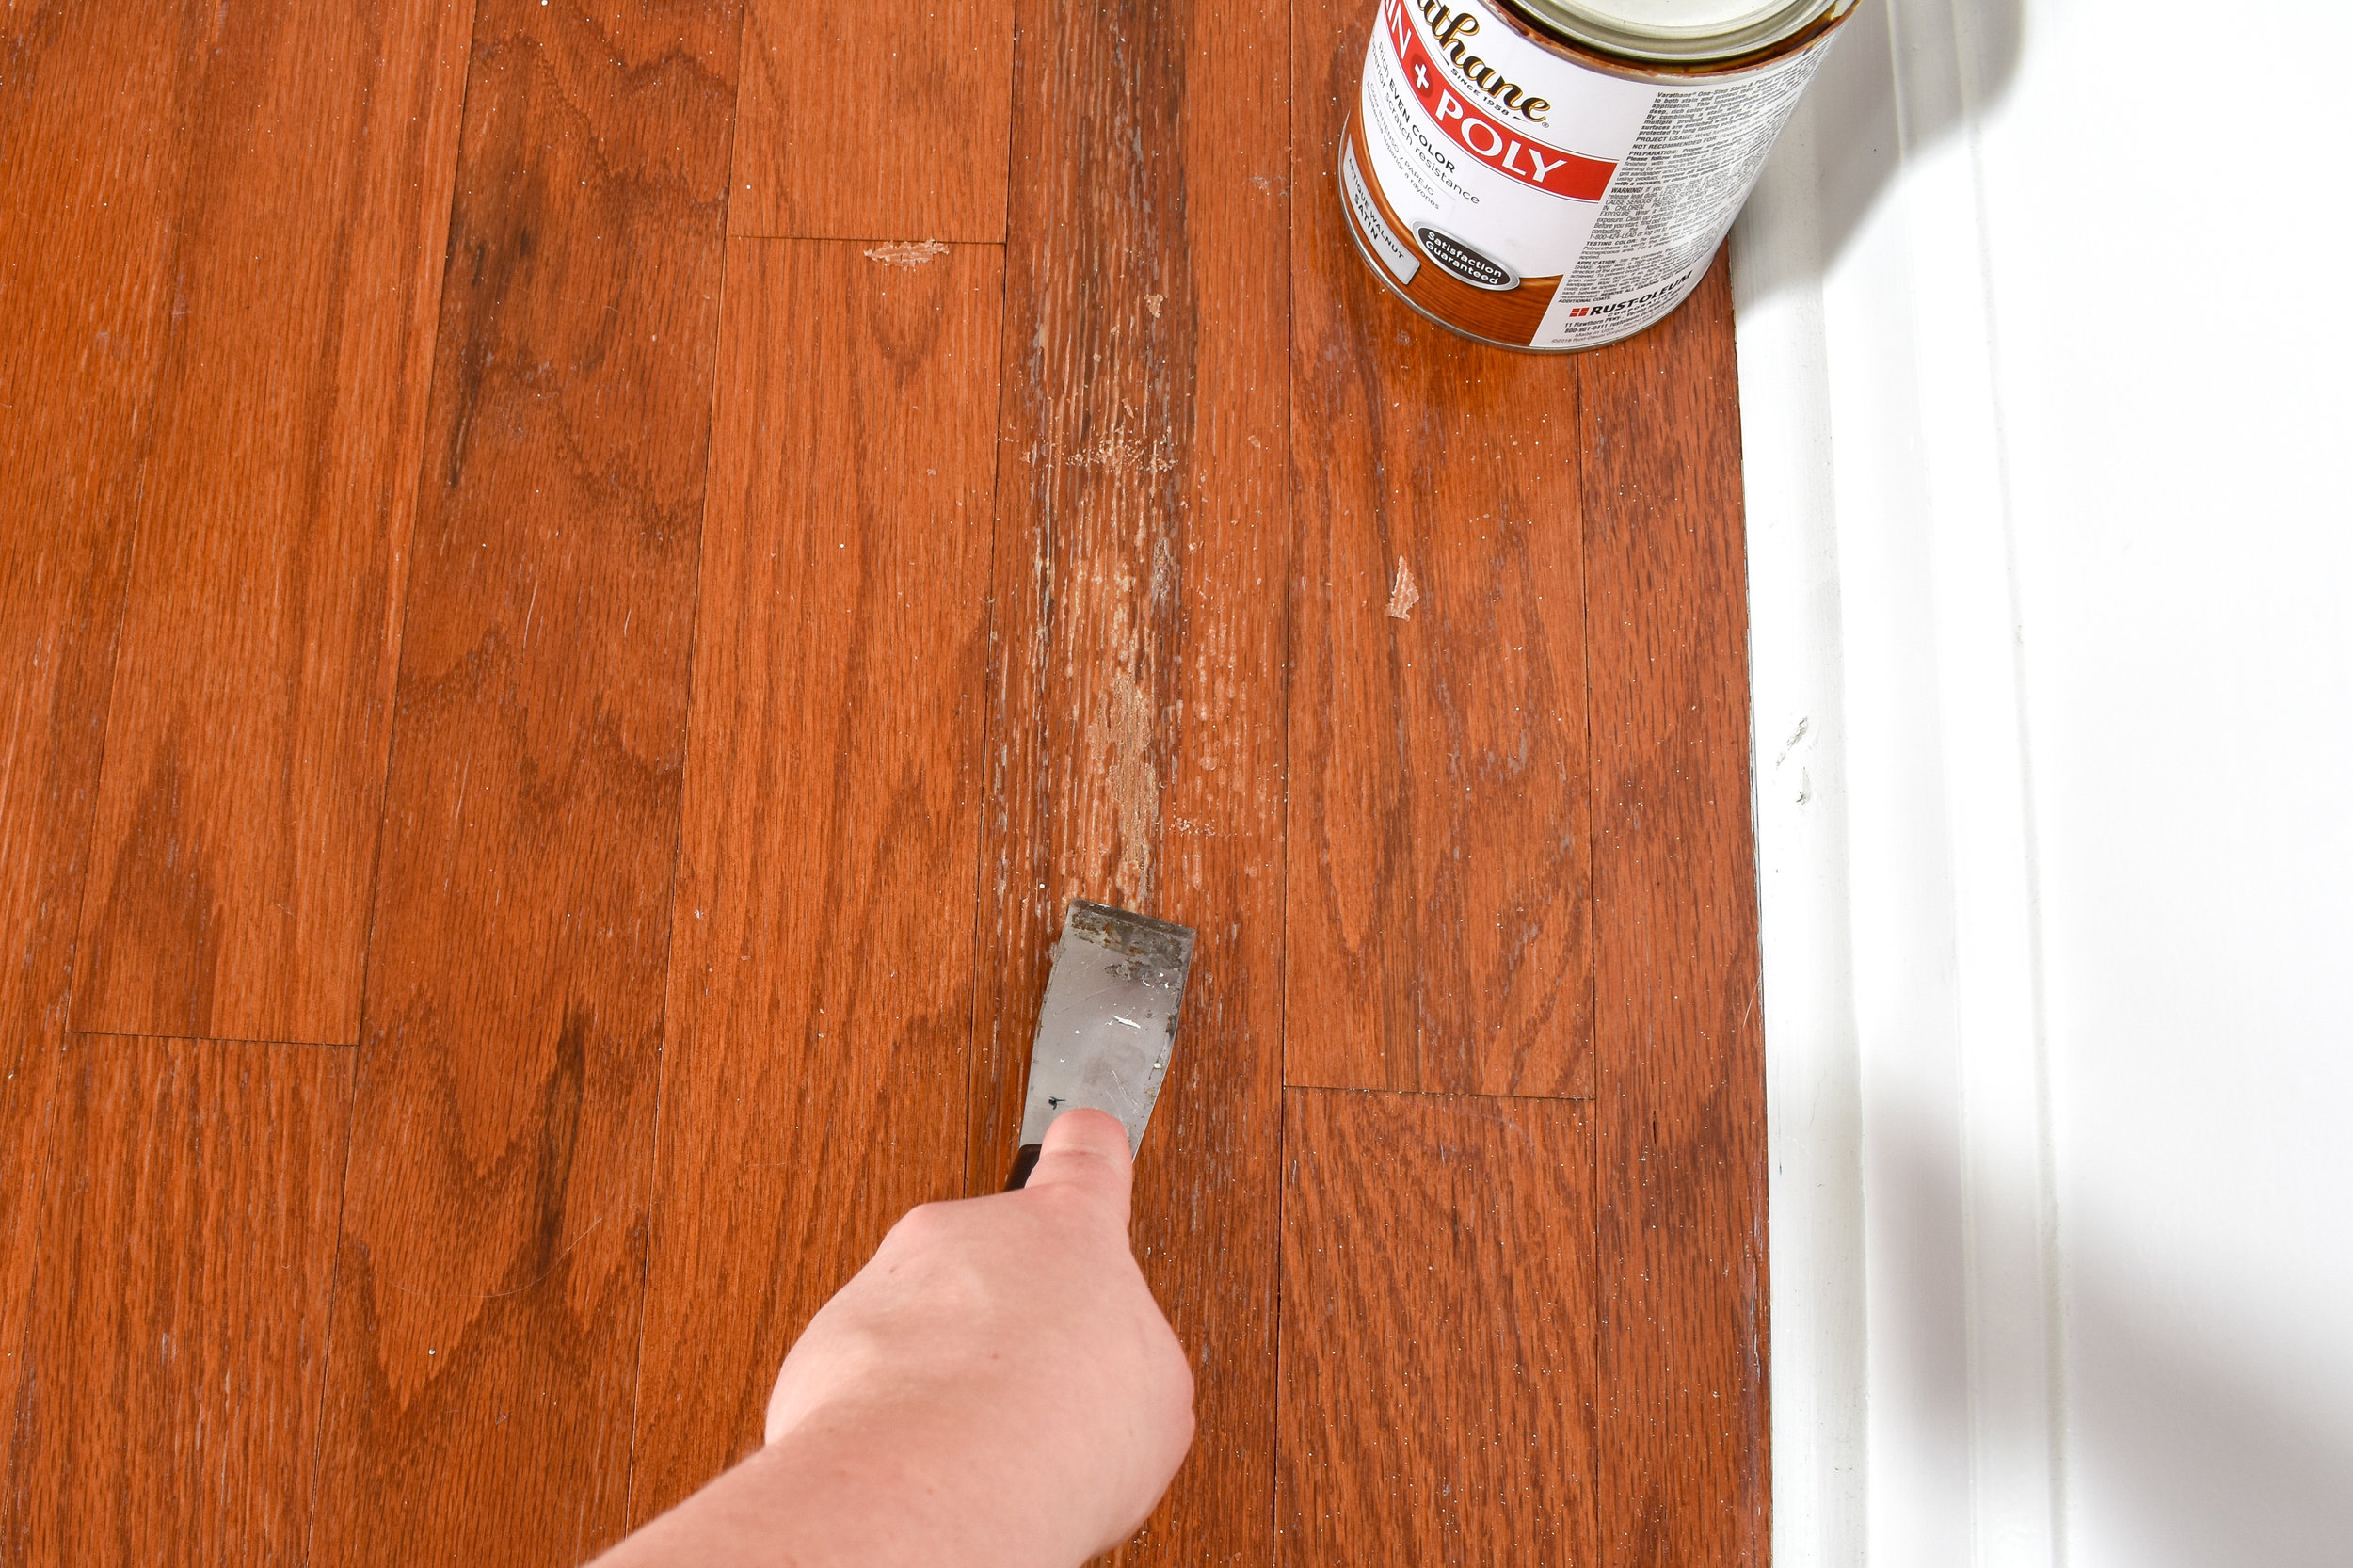 How To Make Old Hardwood Floors Shine, Cleaning Prefinished Hardwood Floors With Vinegar